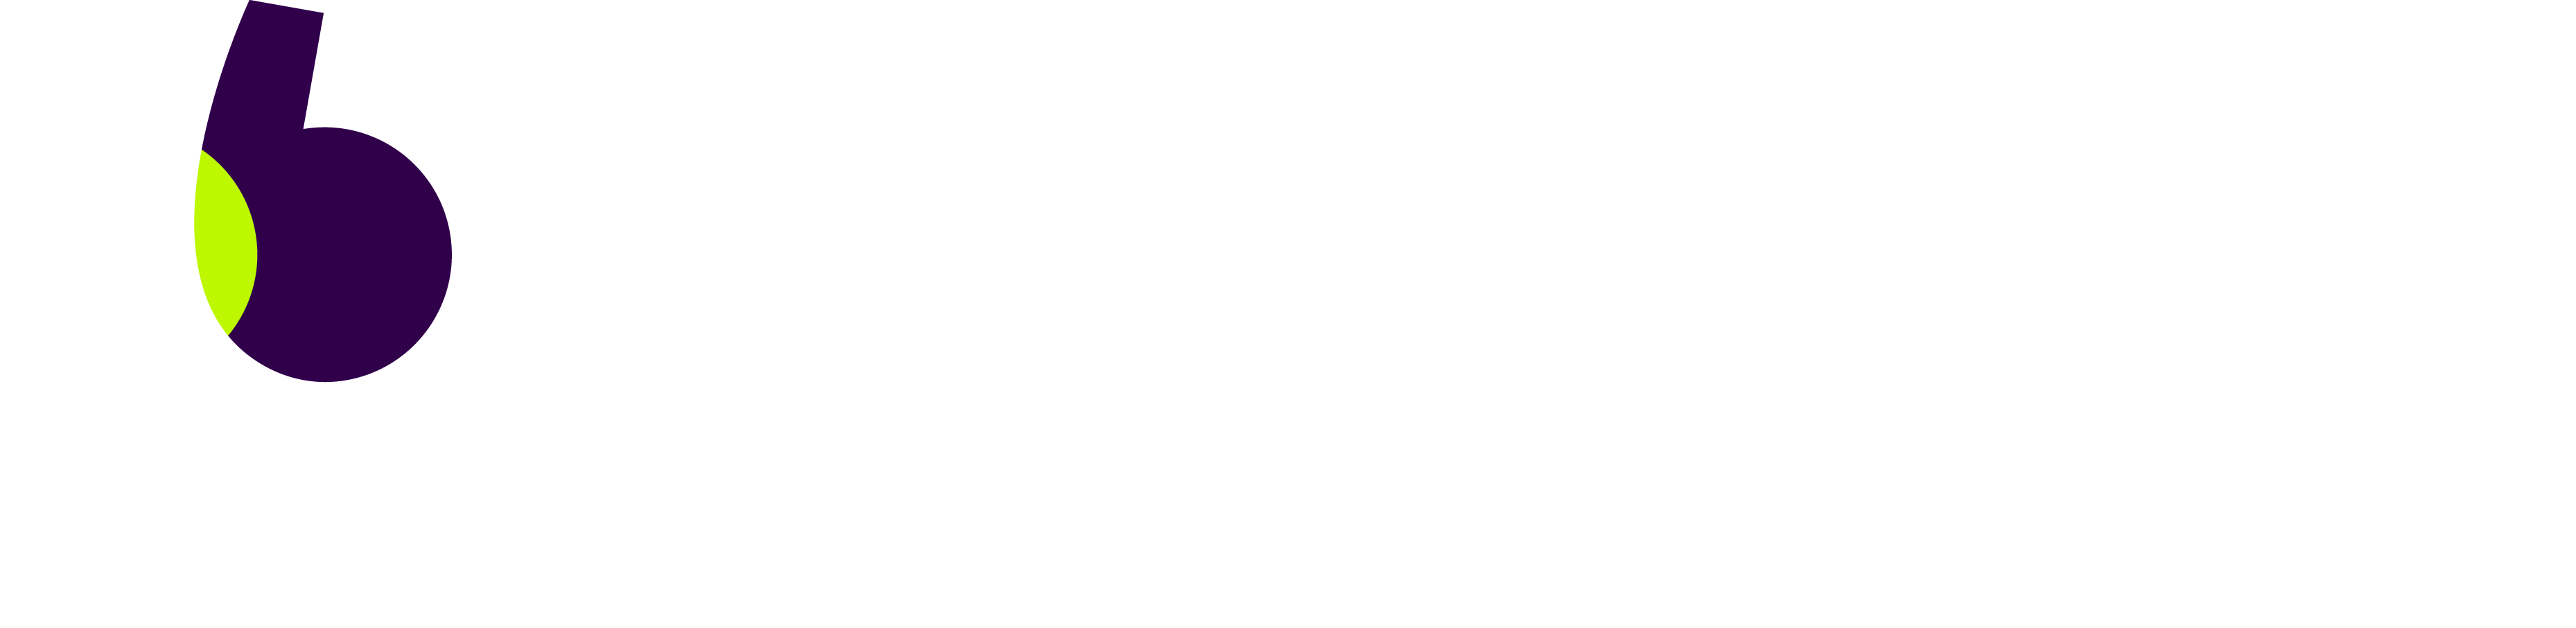 BlaBlaCarDaily-Entreprises_Logo_RGB_Horz-Main_Violet (1)